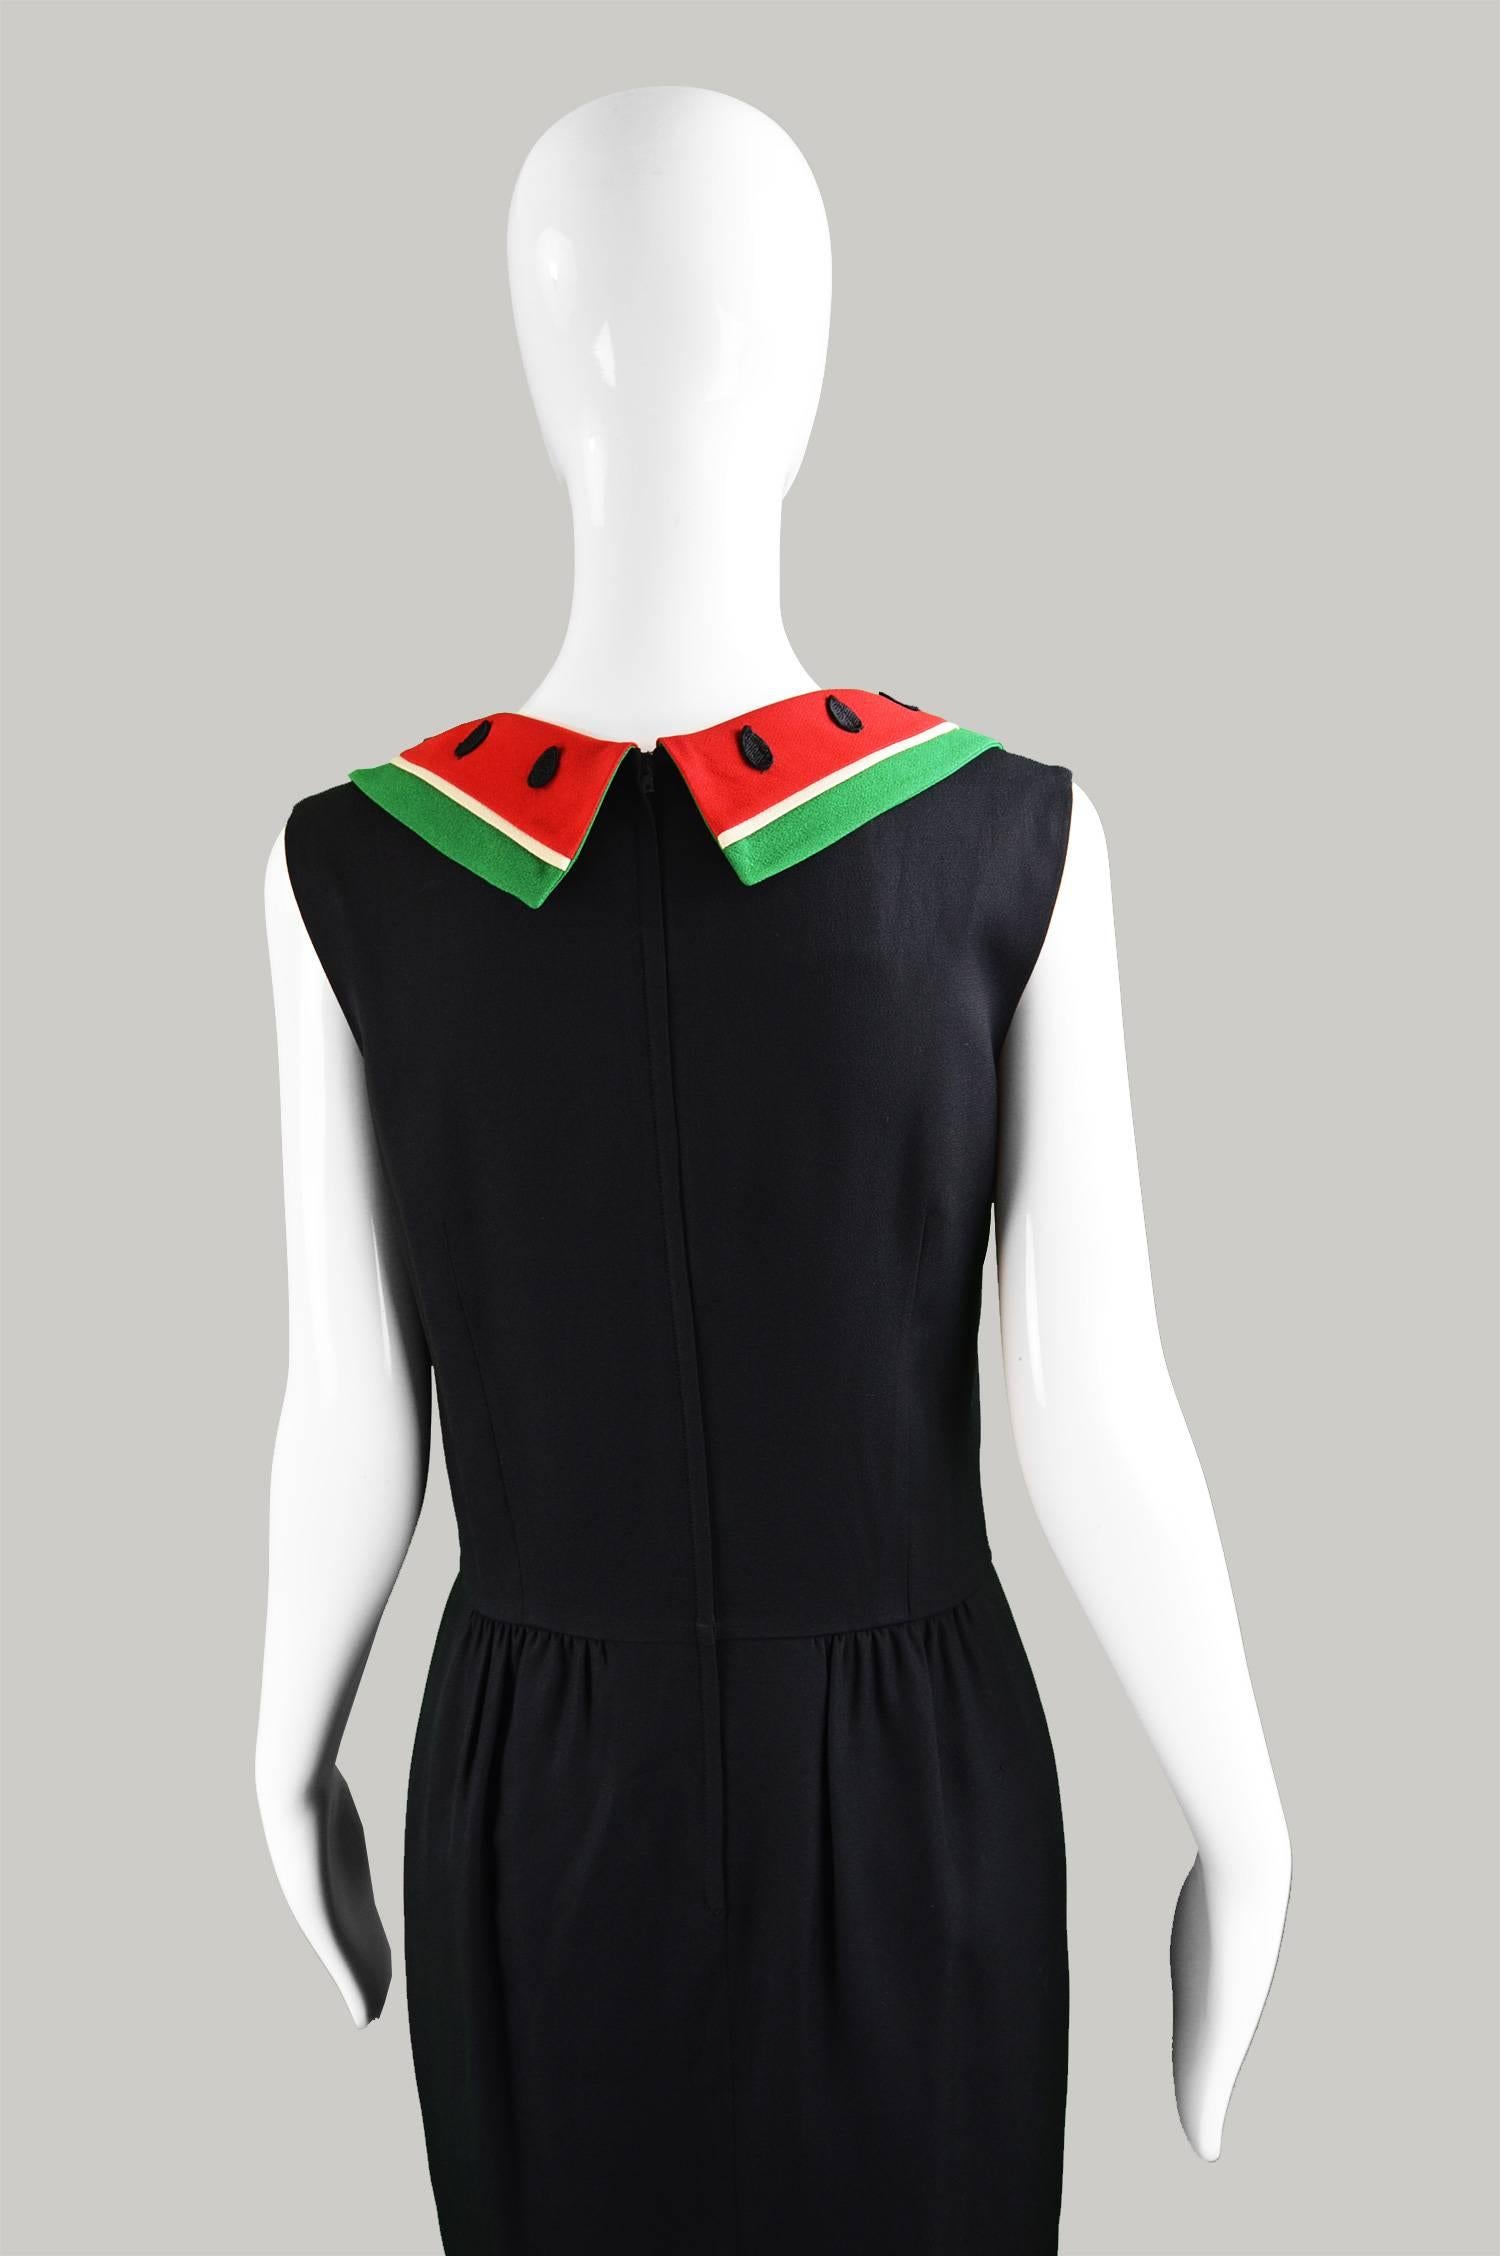 Moschino Cheap & Chic Vintage Watermelon Collar Dress, 1990s 2